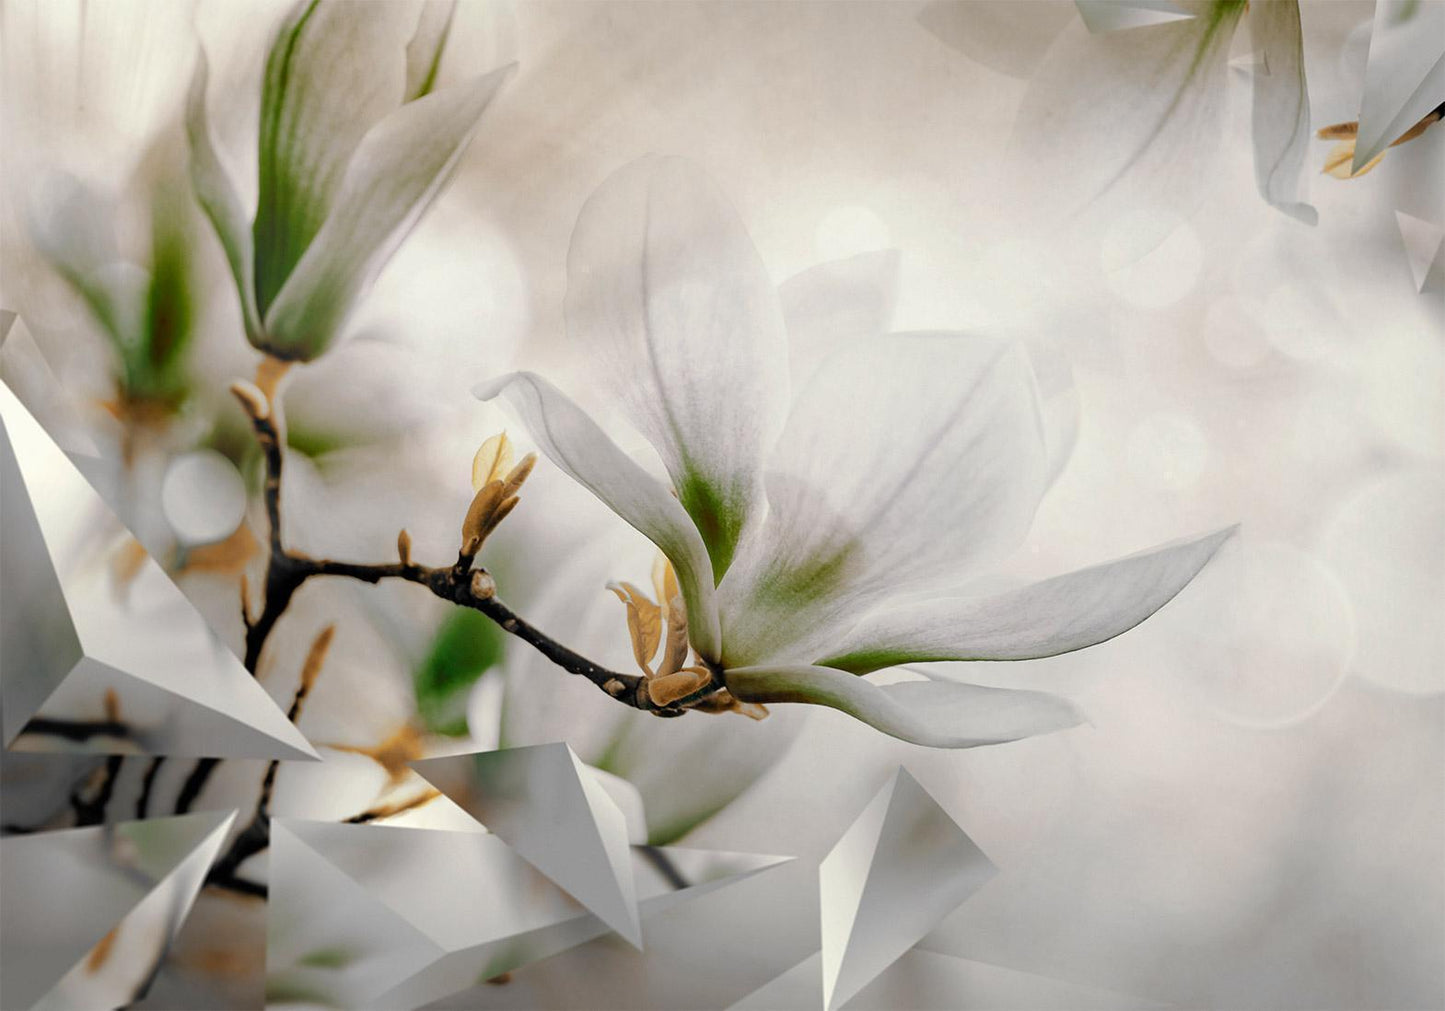 Photo Wallpaper - Subtle Magnolias - Second Variant